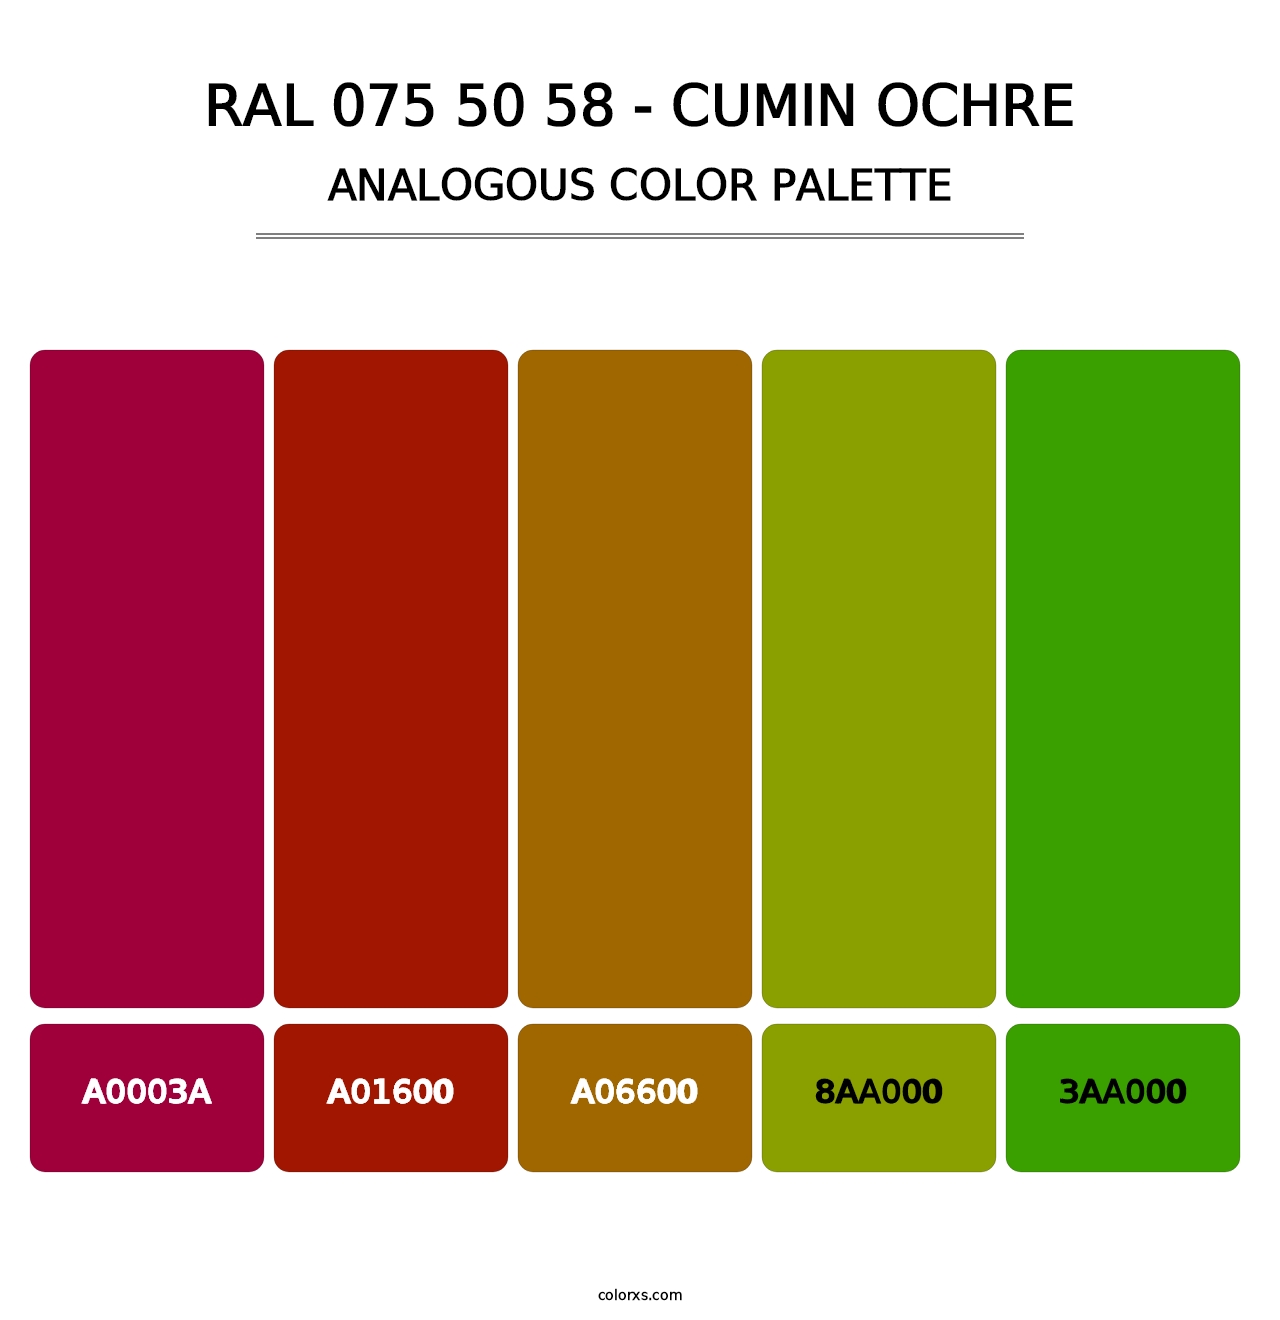 RAL 075 50 58 - Cumin Ochre - Analogous Color Palette